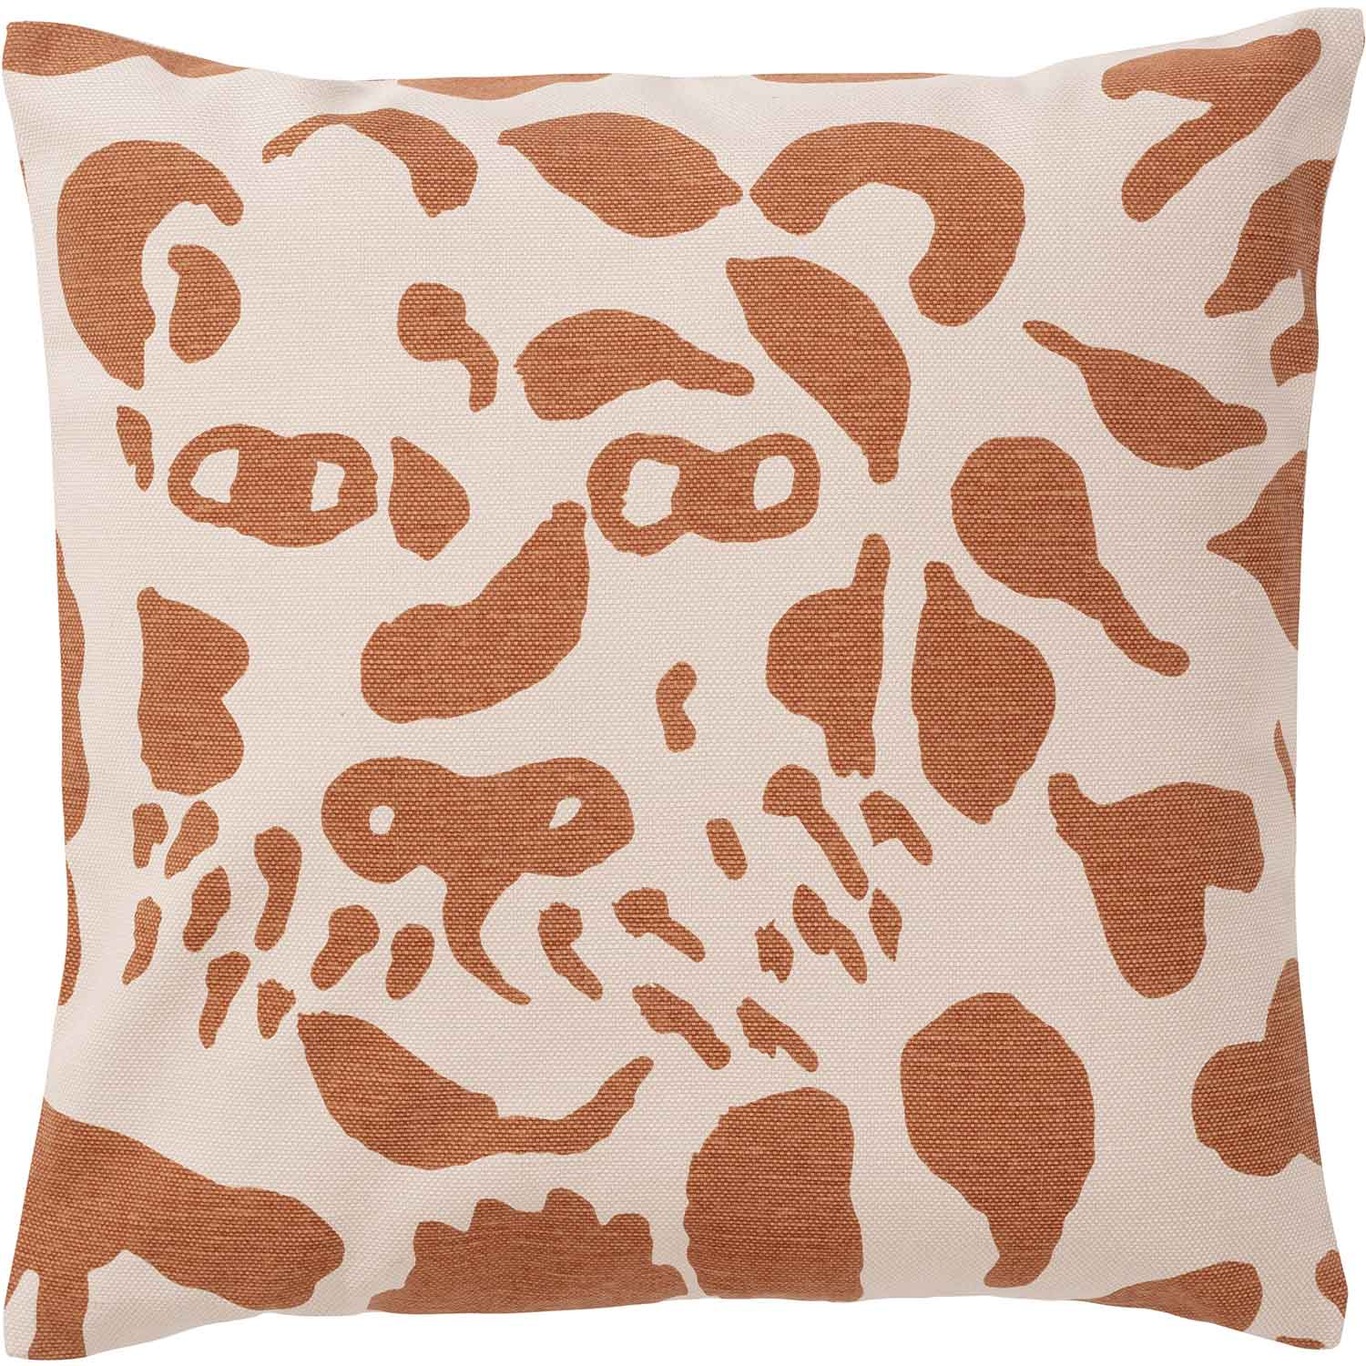 Oiva Toikka Collection Kissenbezug 47x47 cm, Cheetah Brown